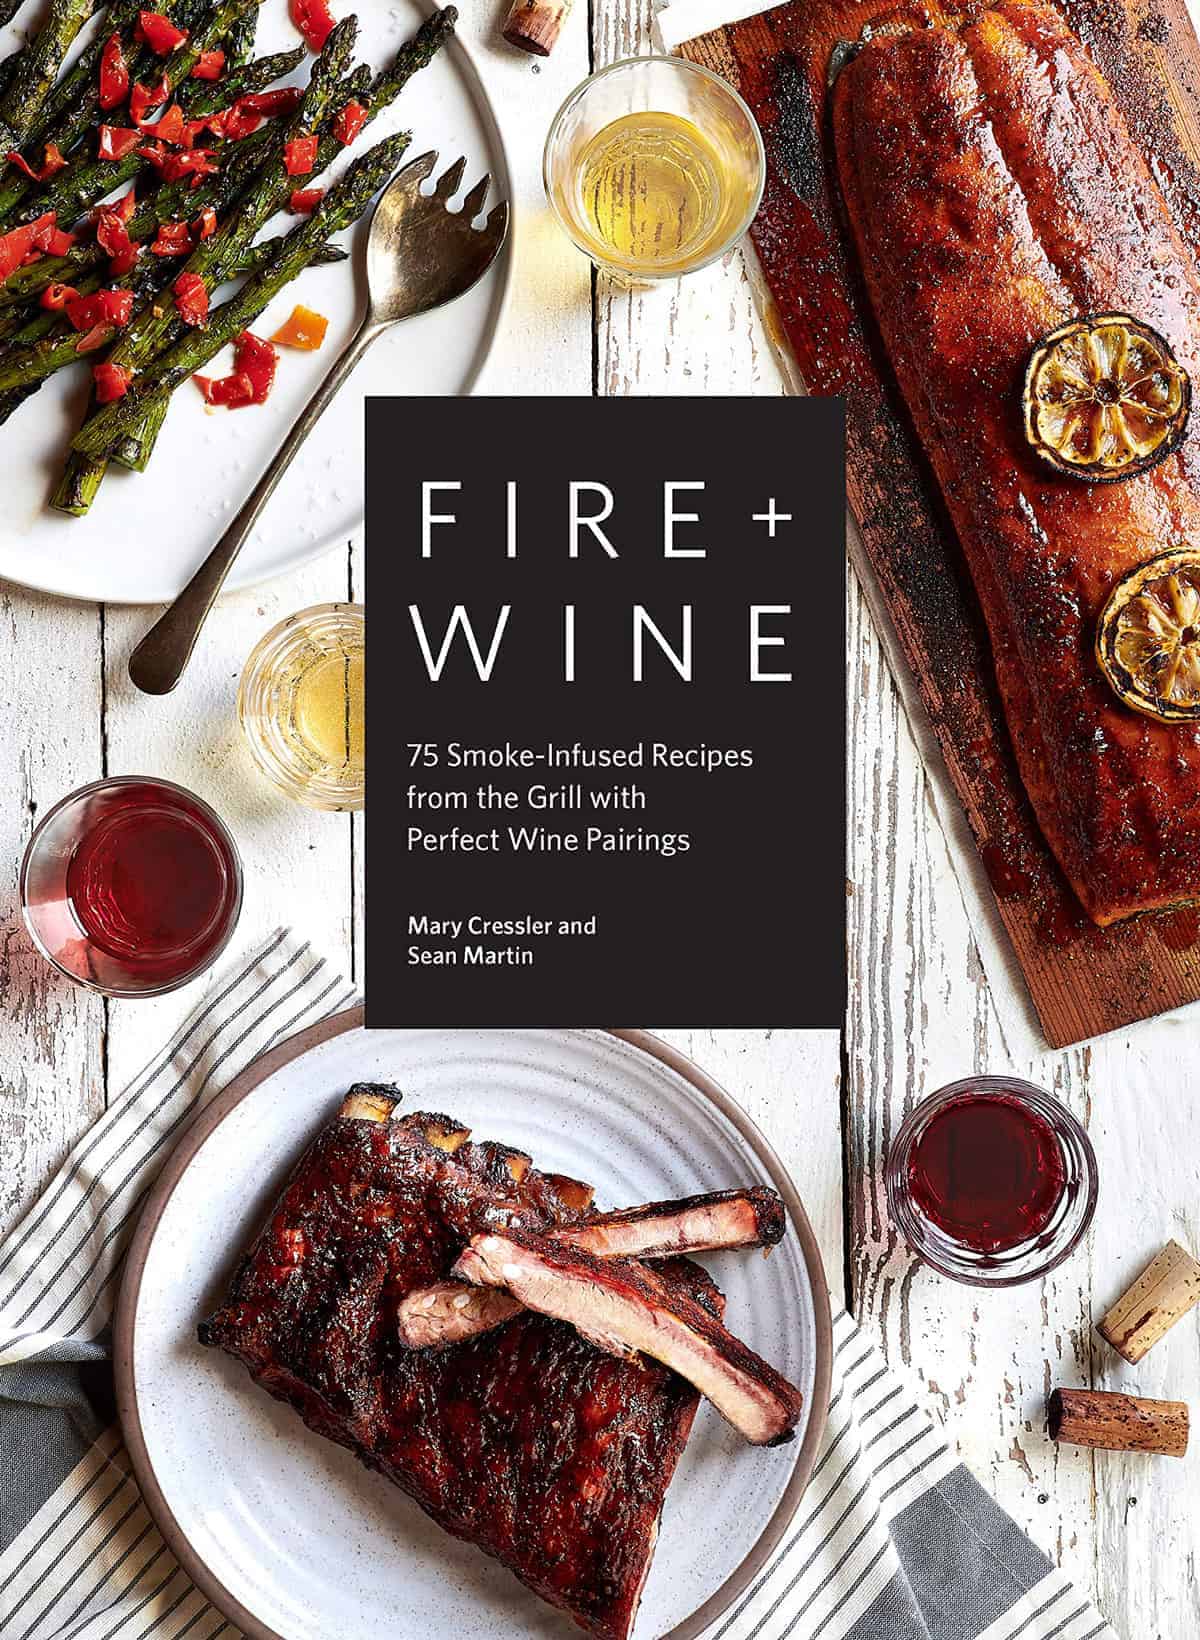 Fire + Wine Cookbook Cover